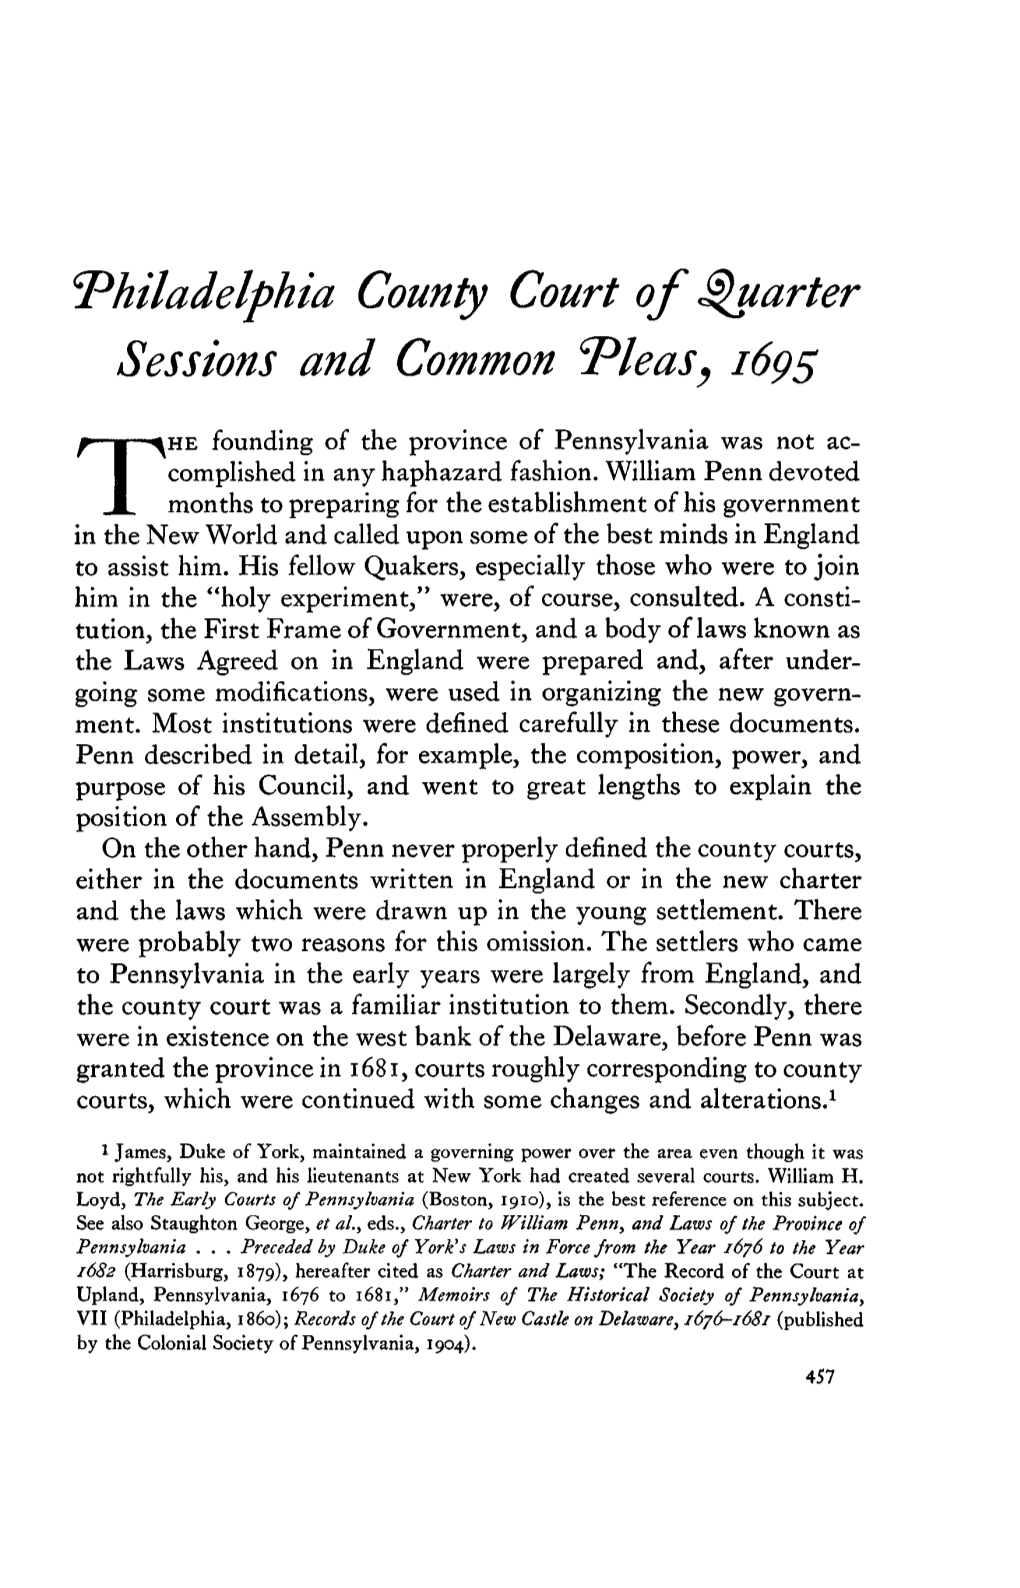 "Philadelphia County Court of Quarter Sessions and Common Pleas, 1695